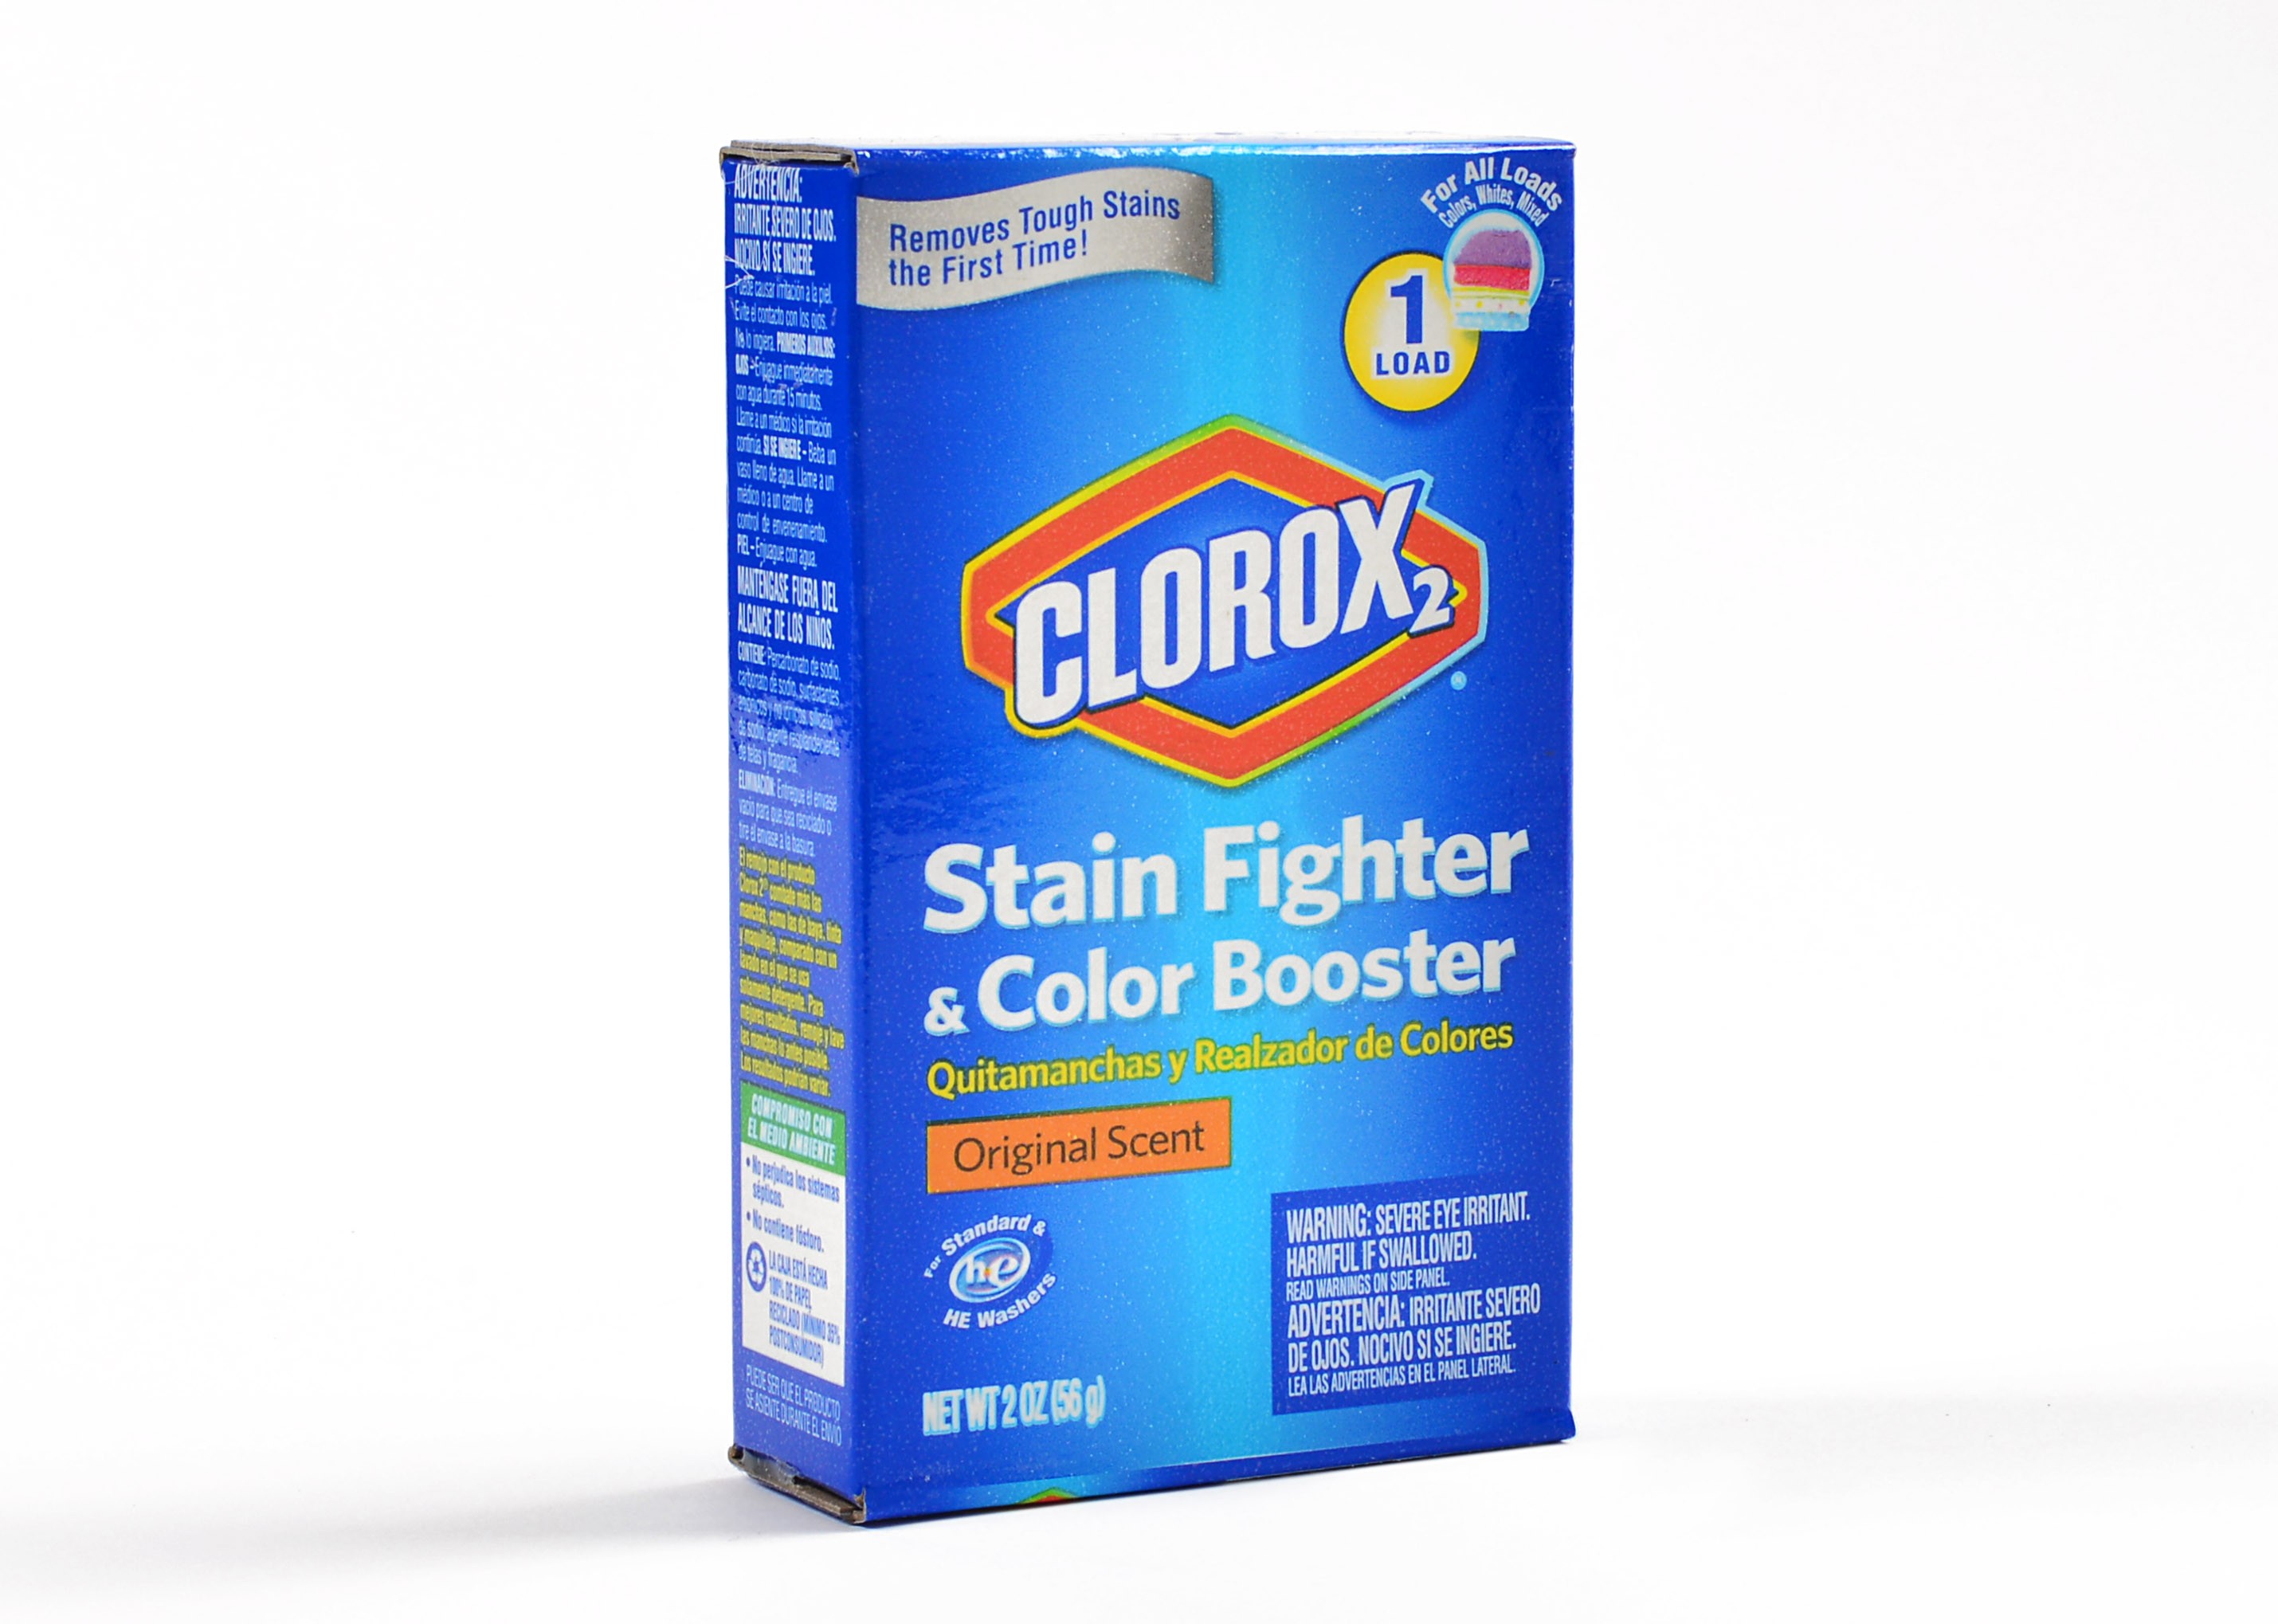 Clorox 2 Powder Laundry Detergent - Coin Vending